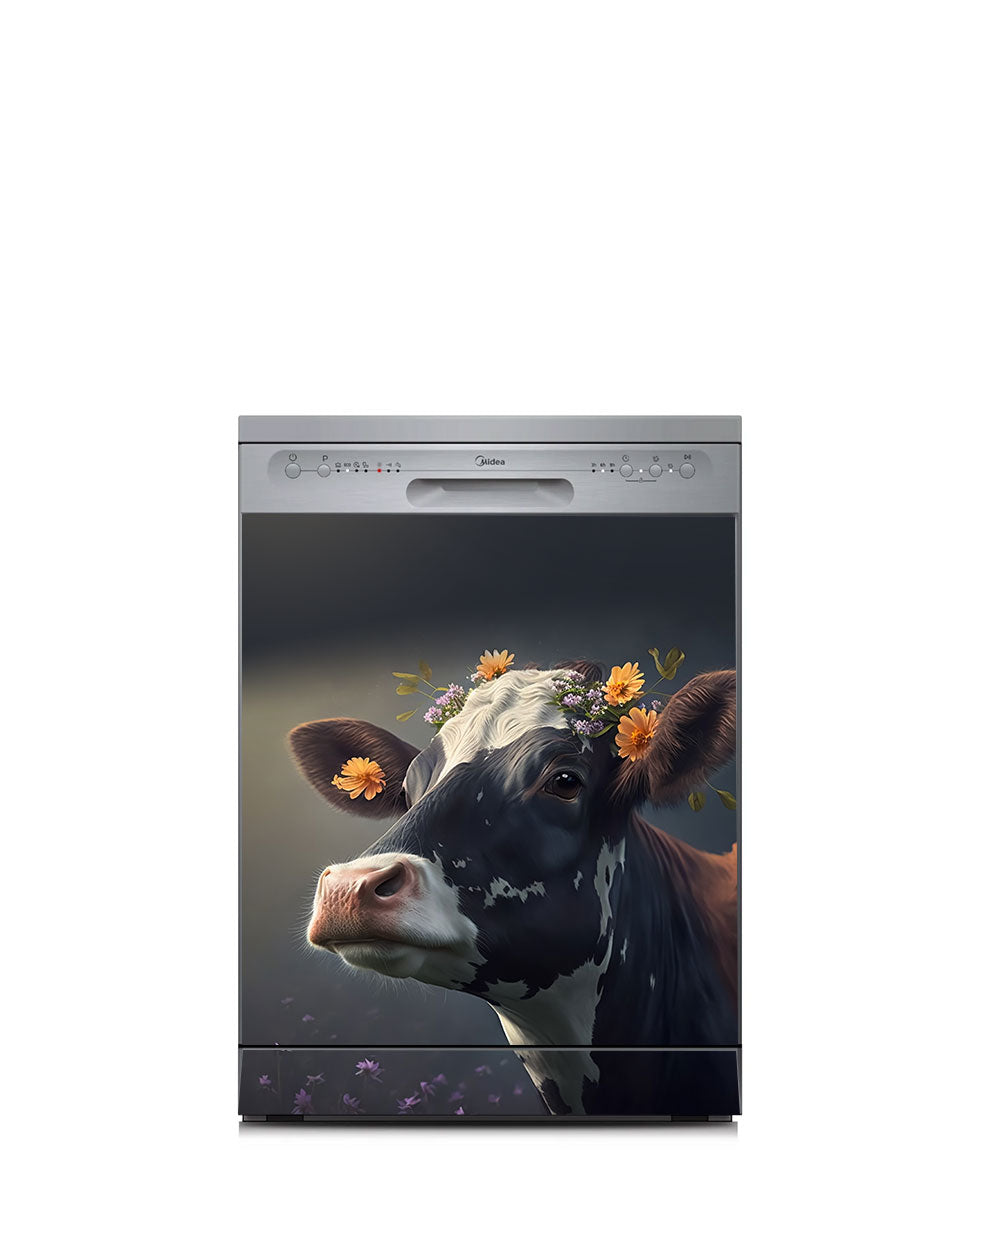 Imán de cubierta completa de vaca – KUDUmagnets